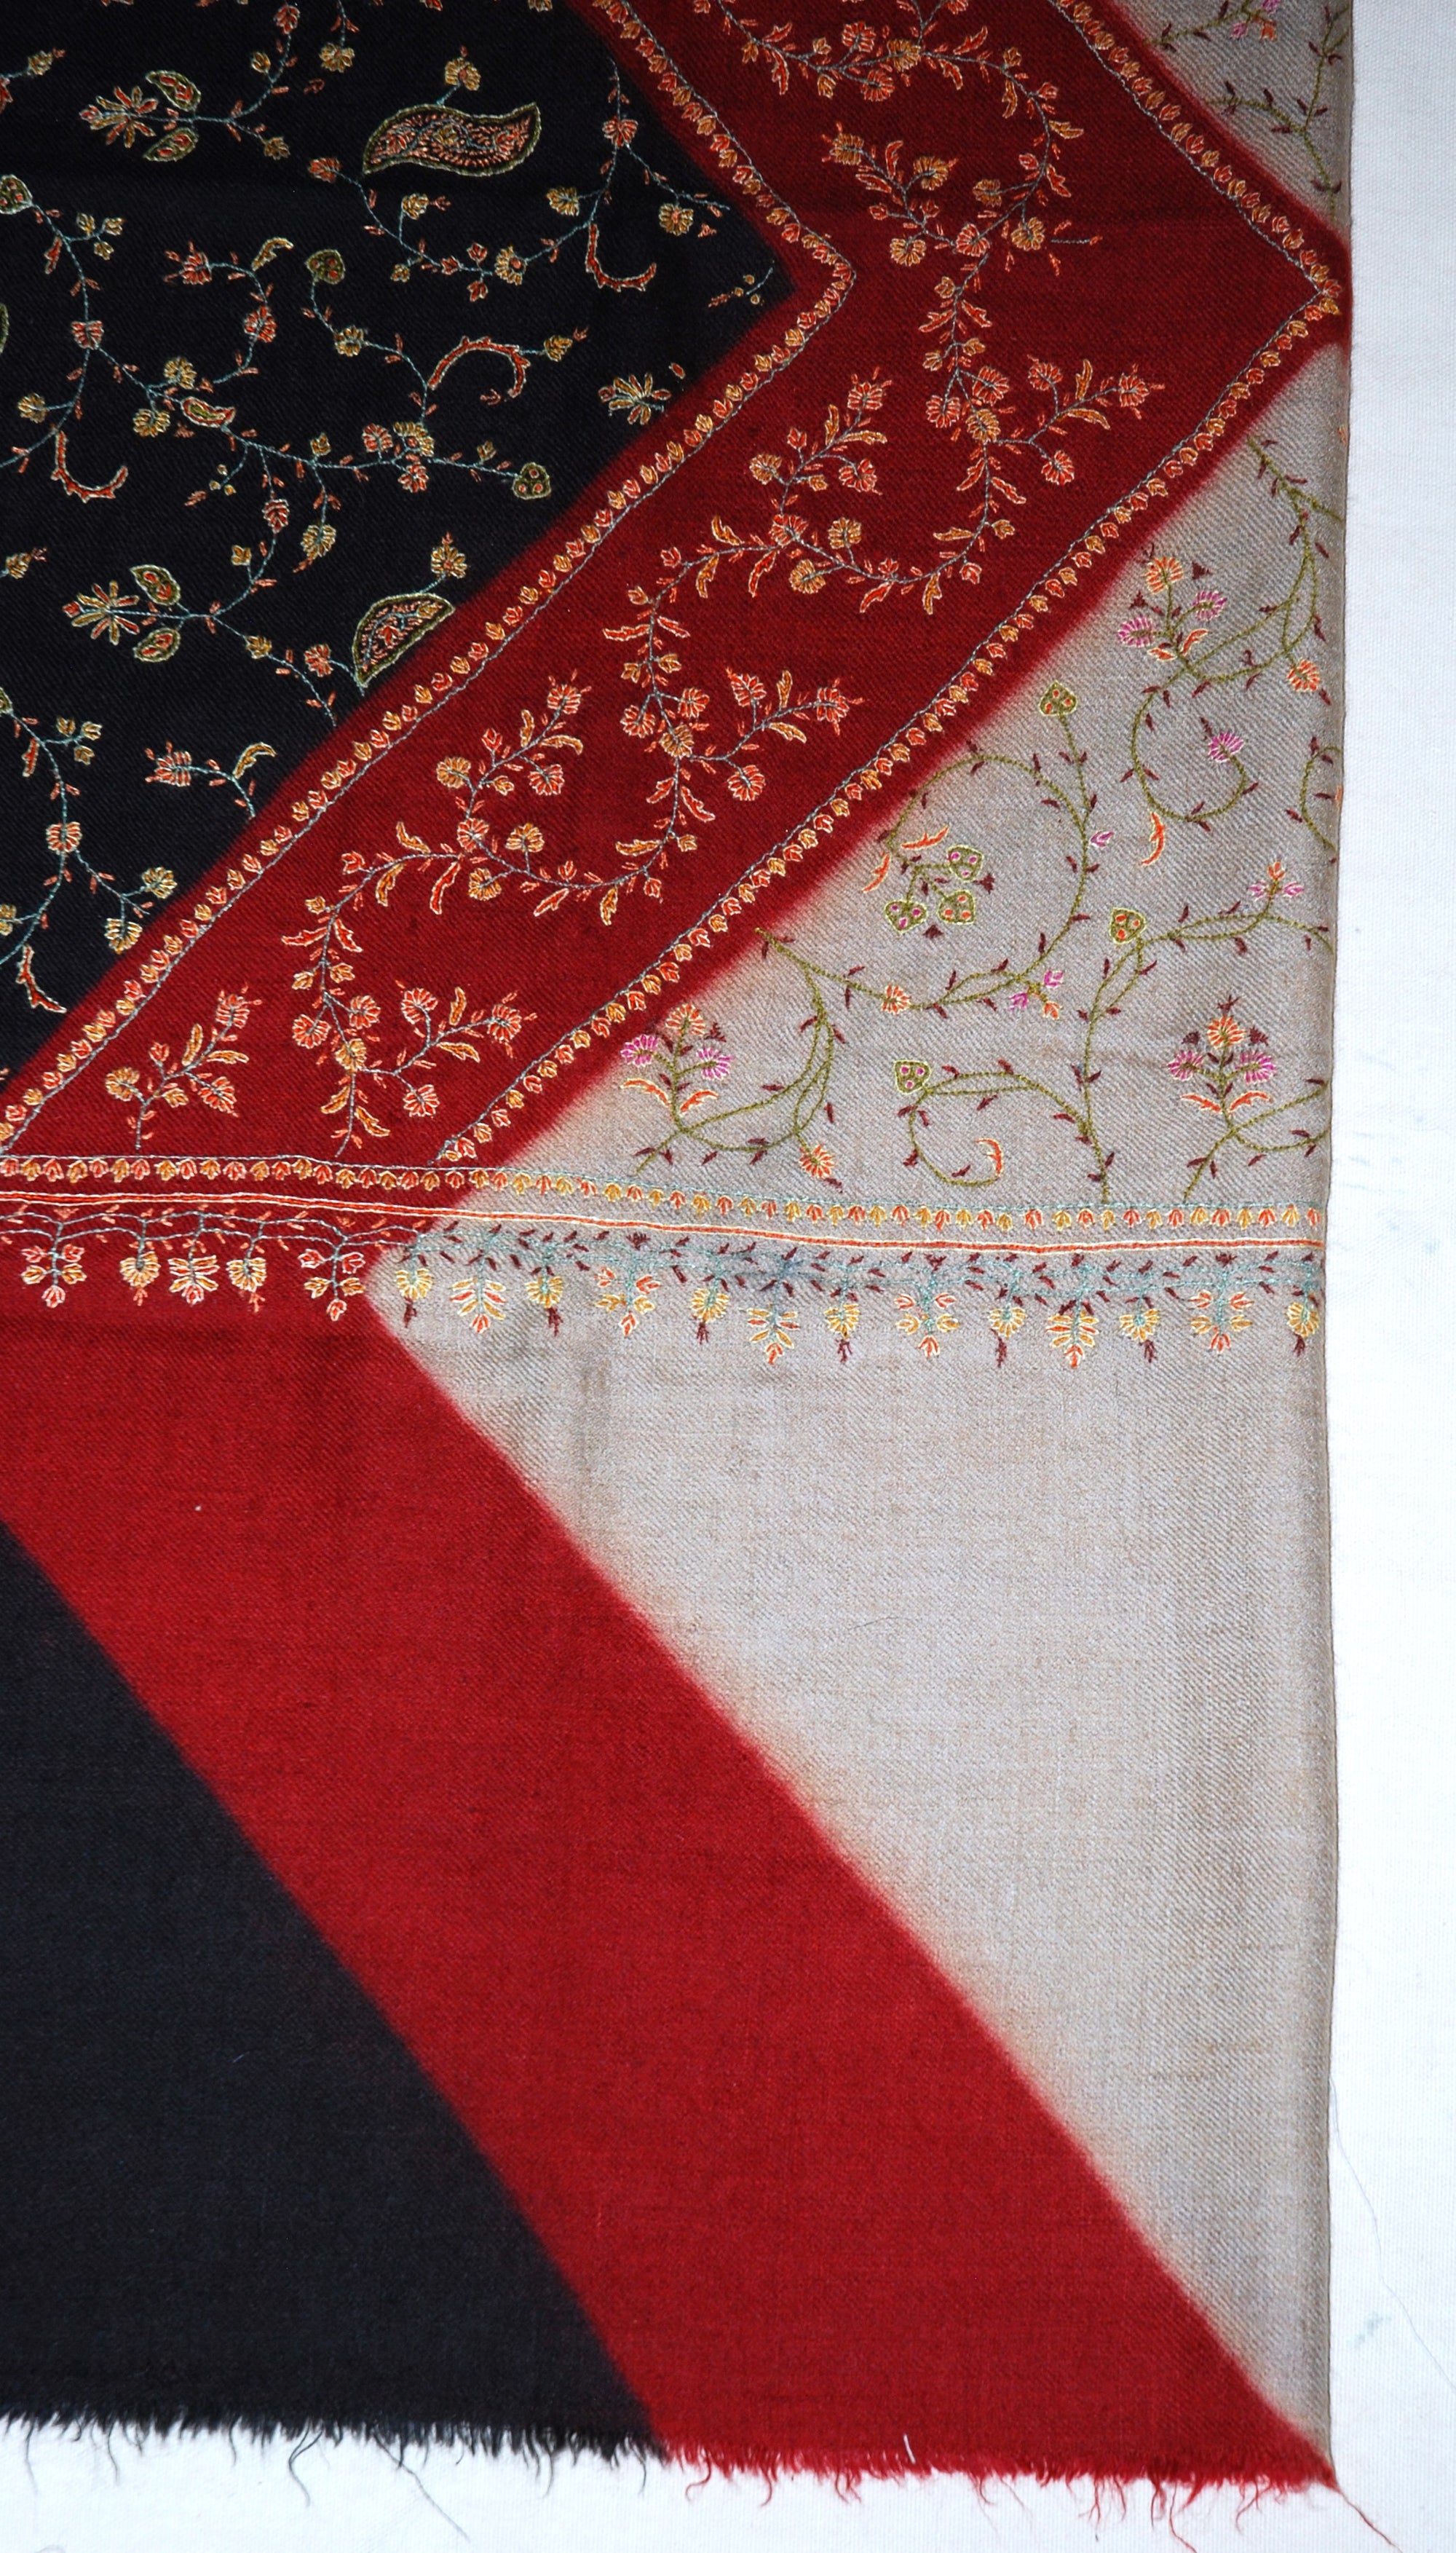 Kashmir Pashmina "Sozni" Needlework Embroidered "Cashmere" Shawl, Multicolor #PJL-104